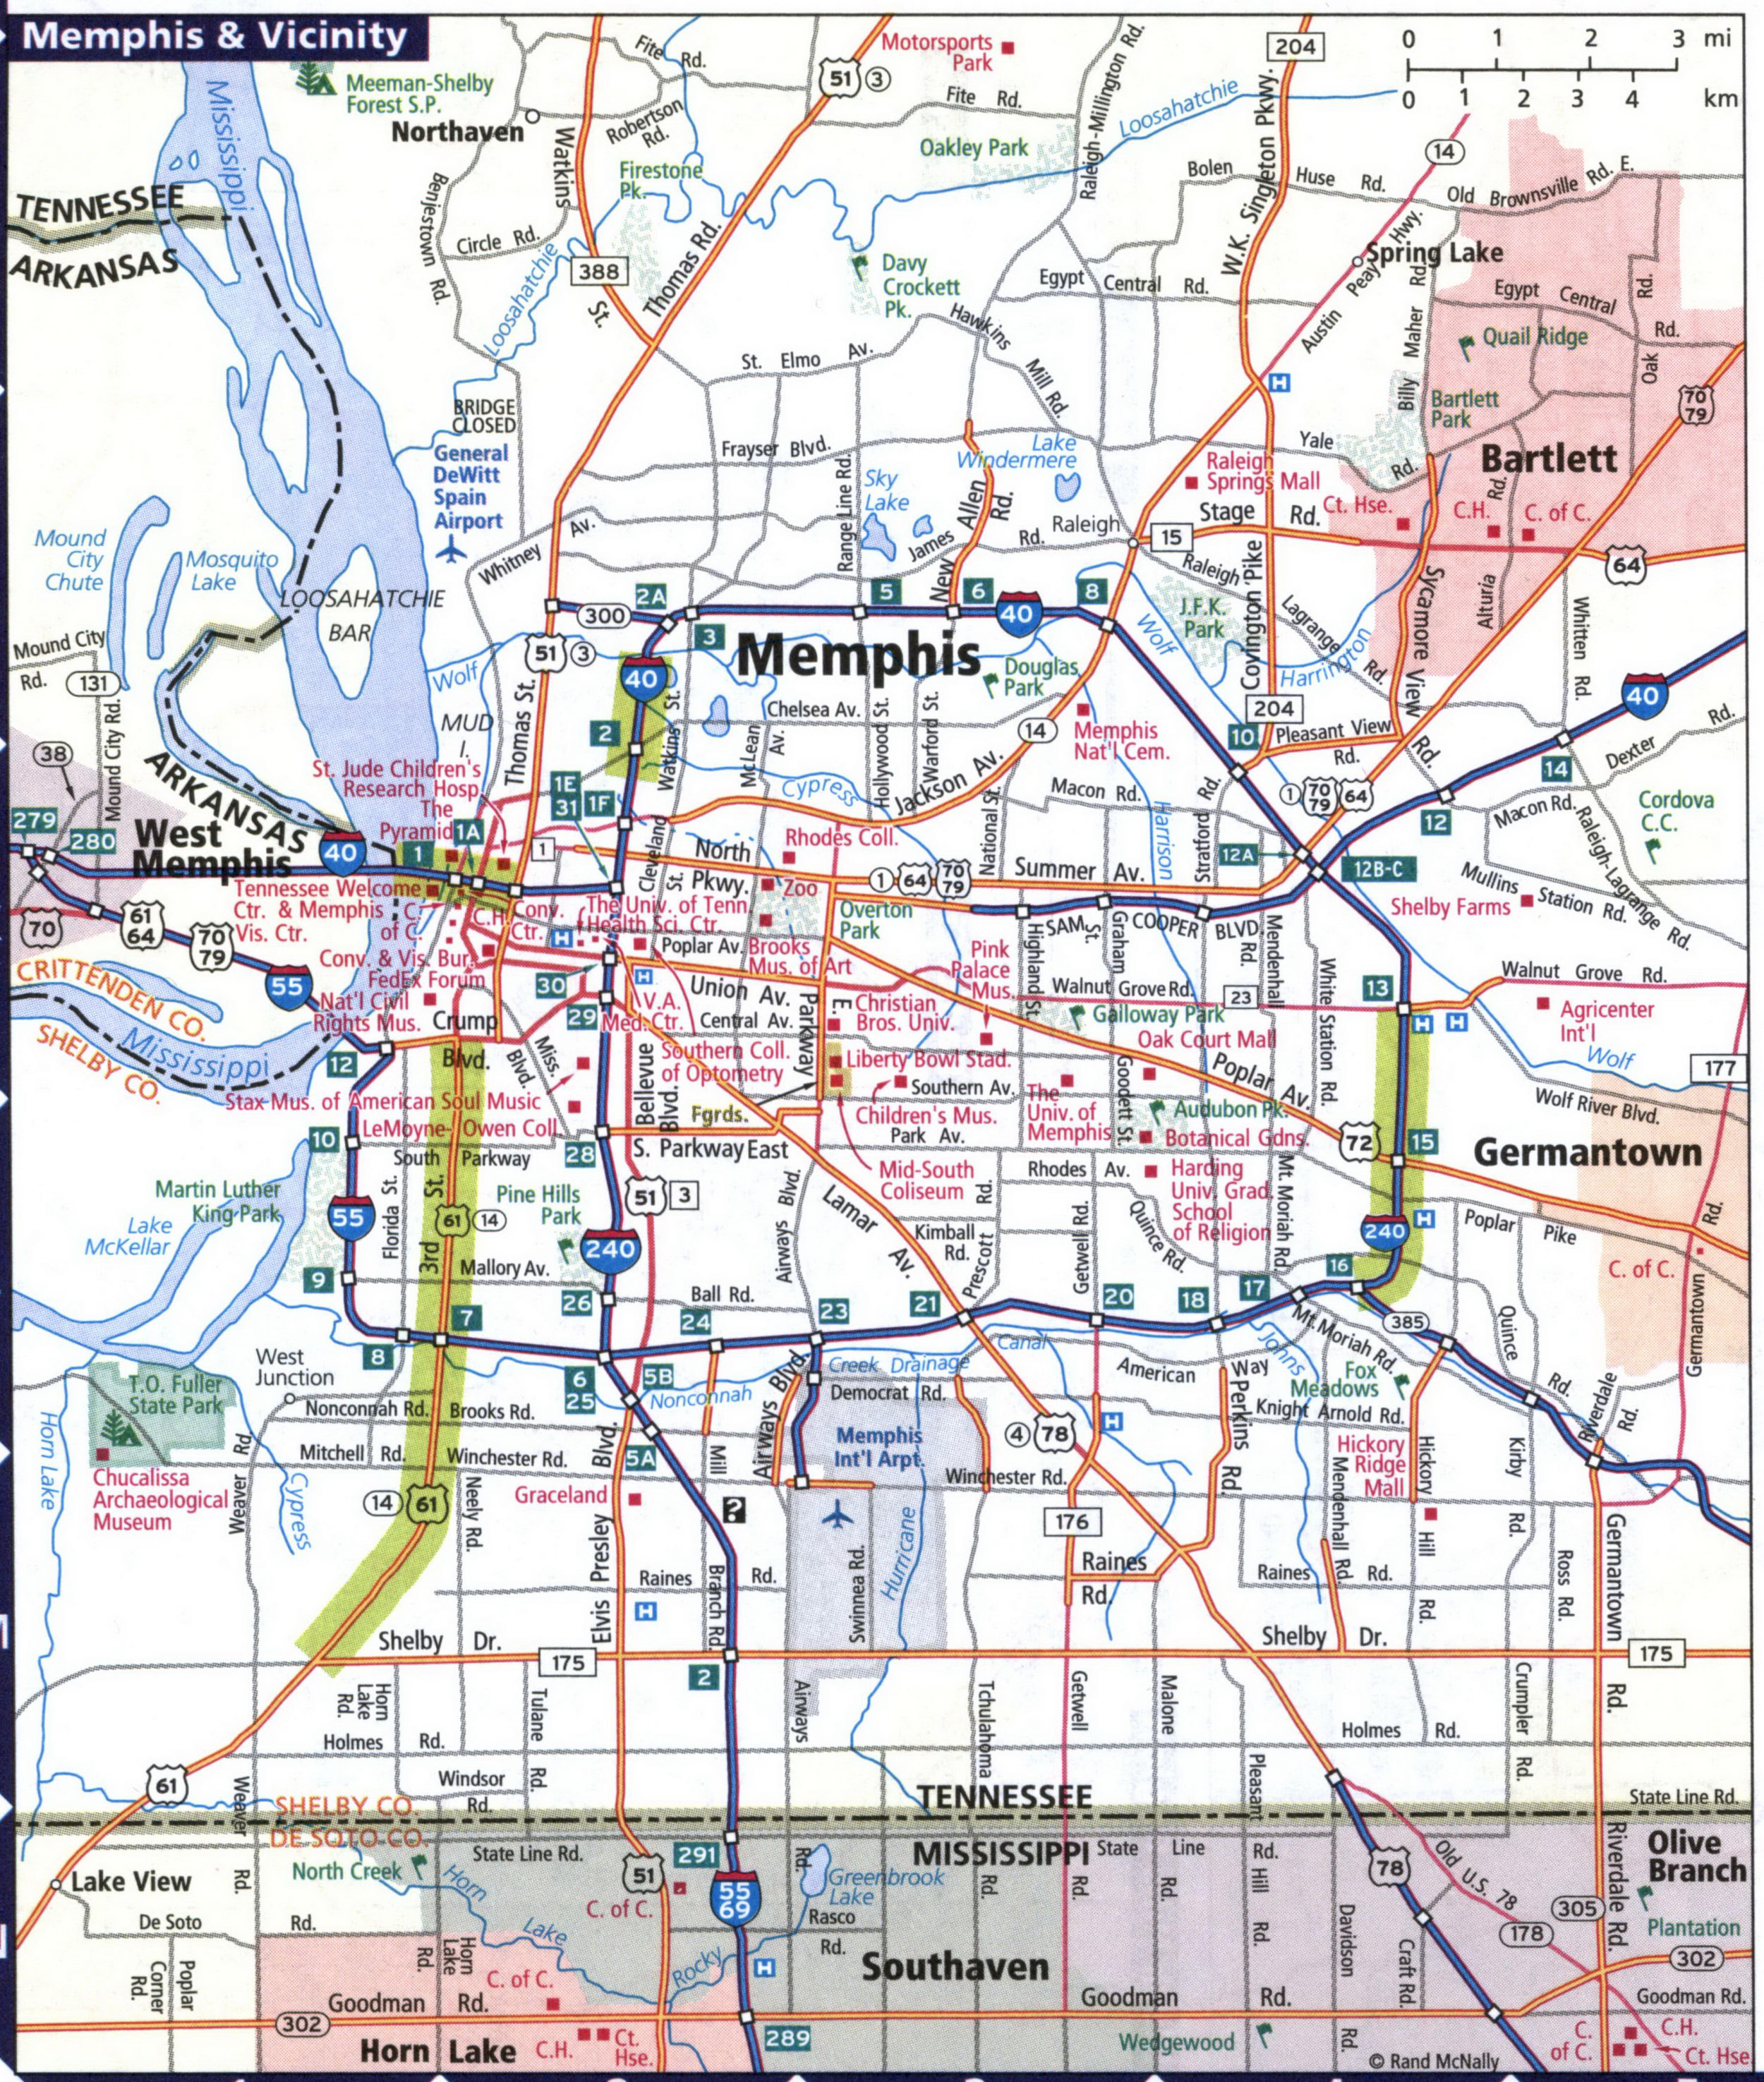 Map of Memphis area